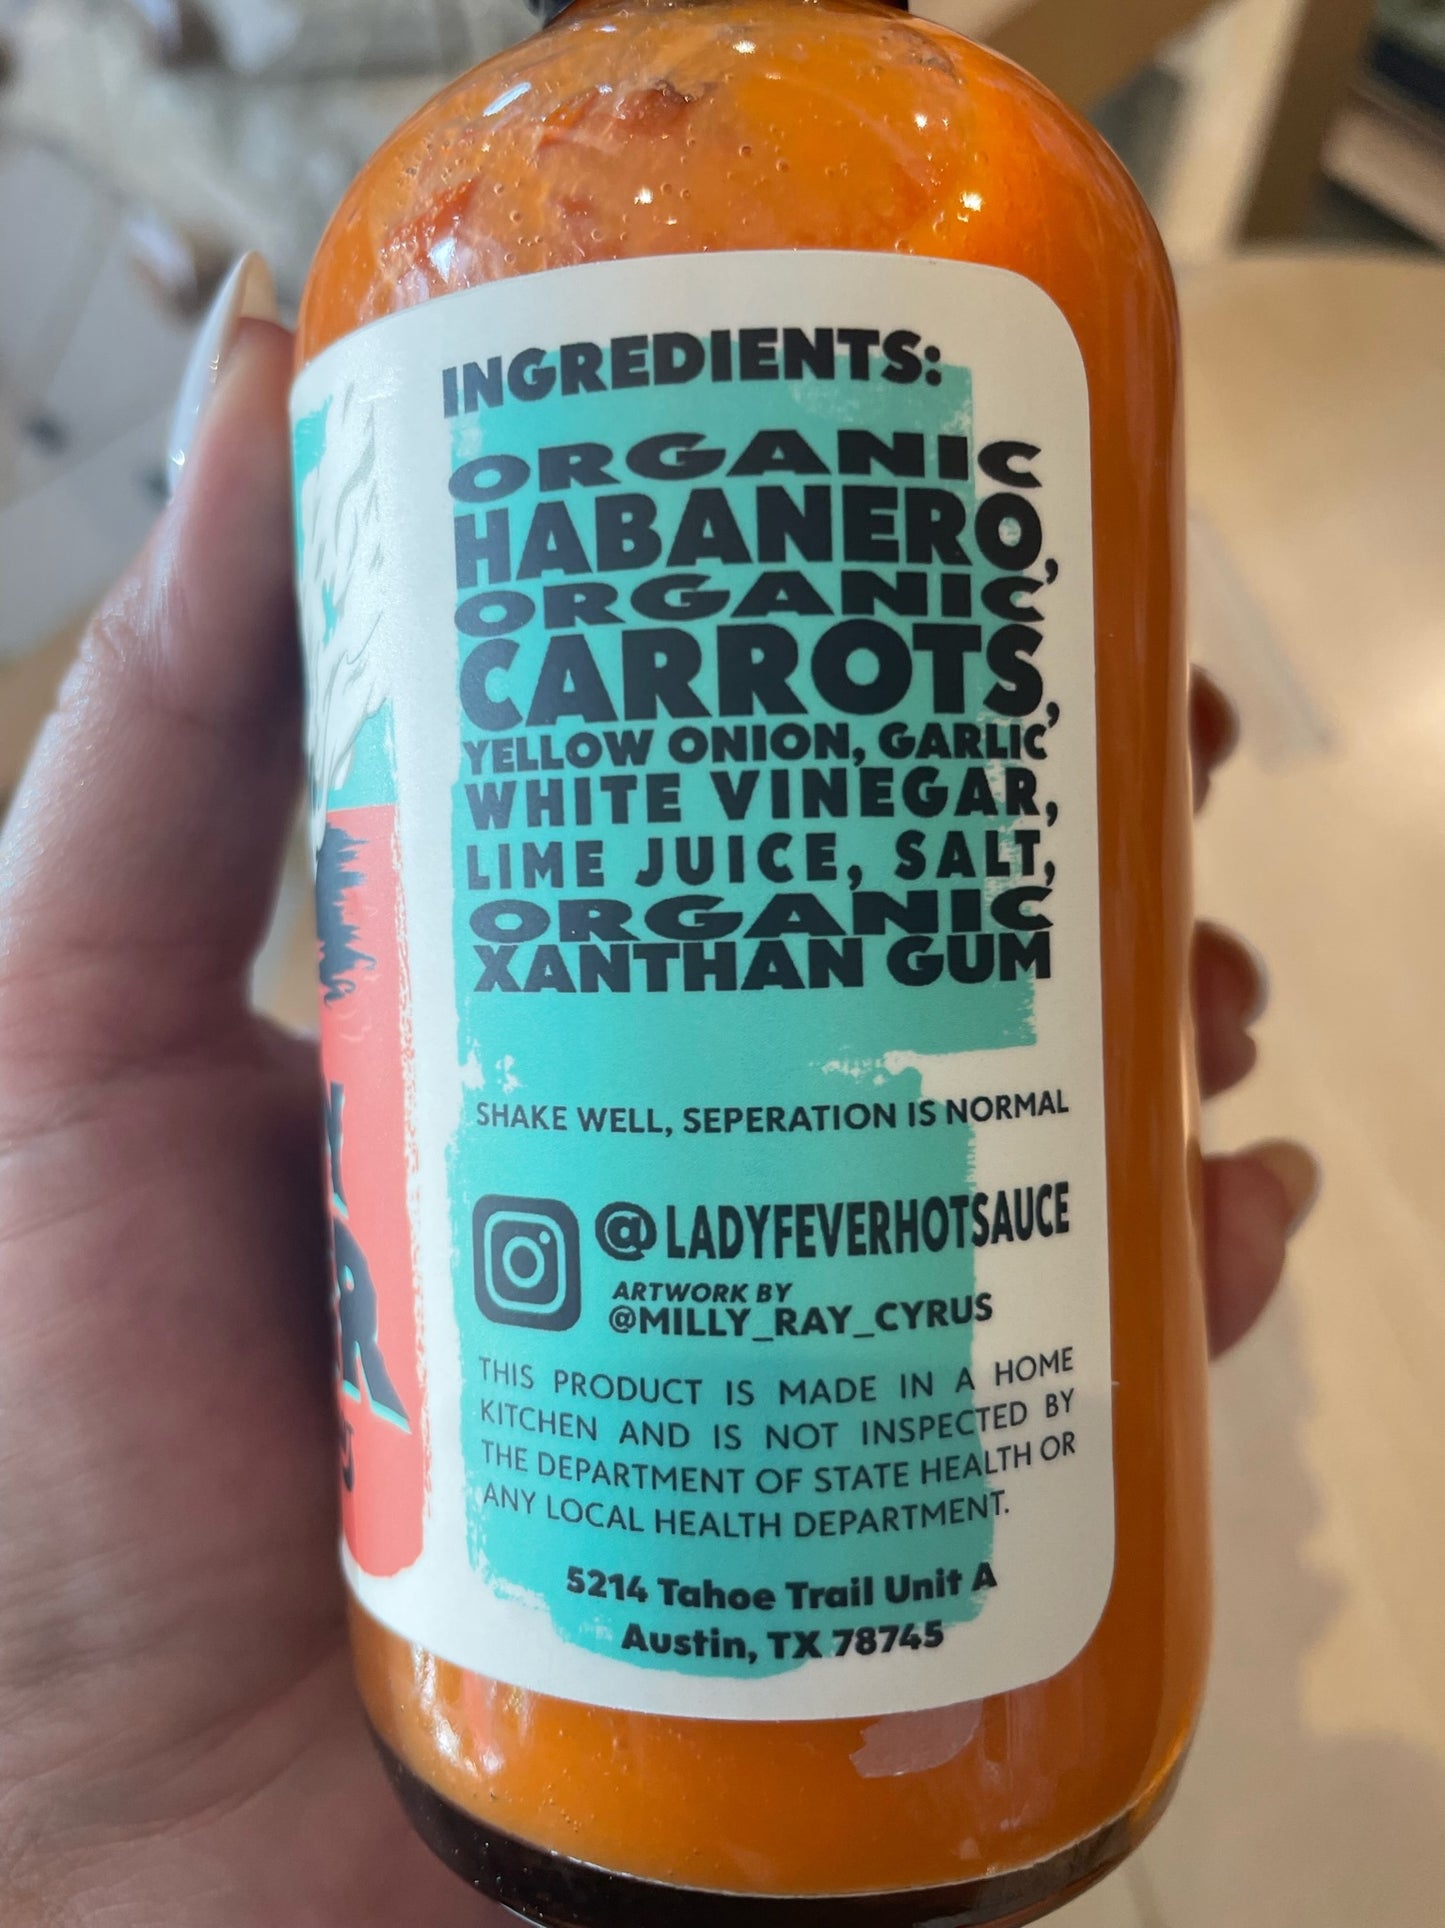 Habanero Carrot Hot Sauce